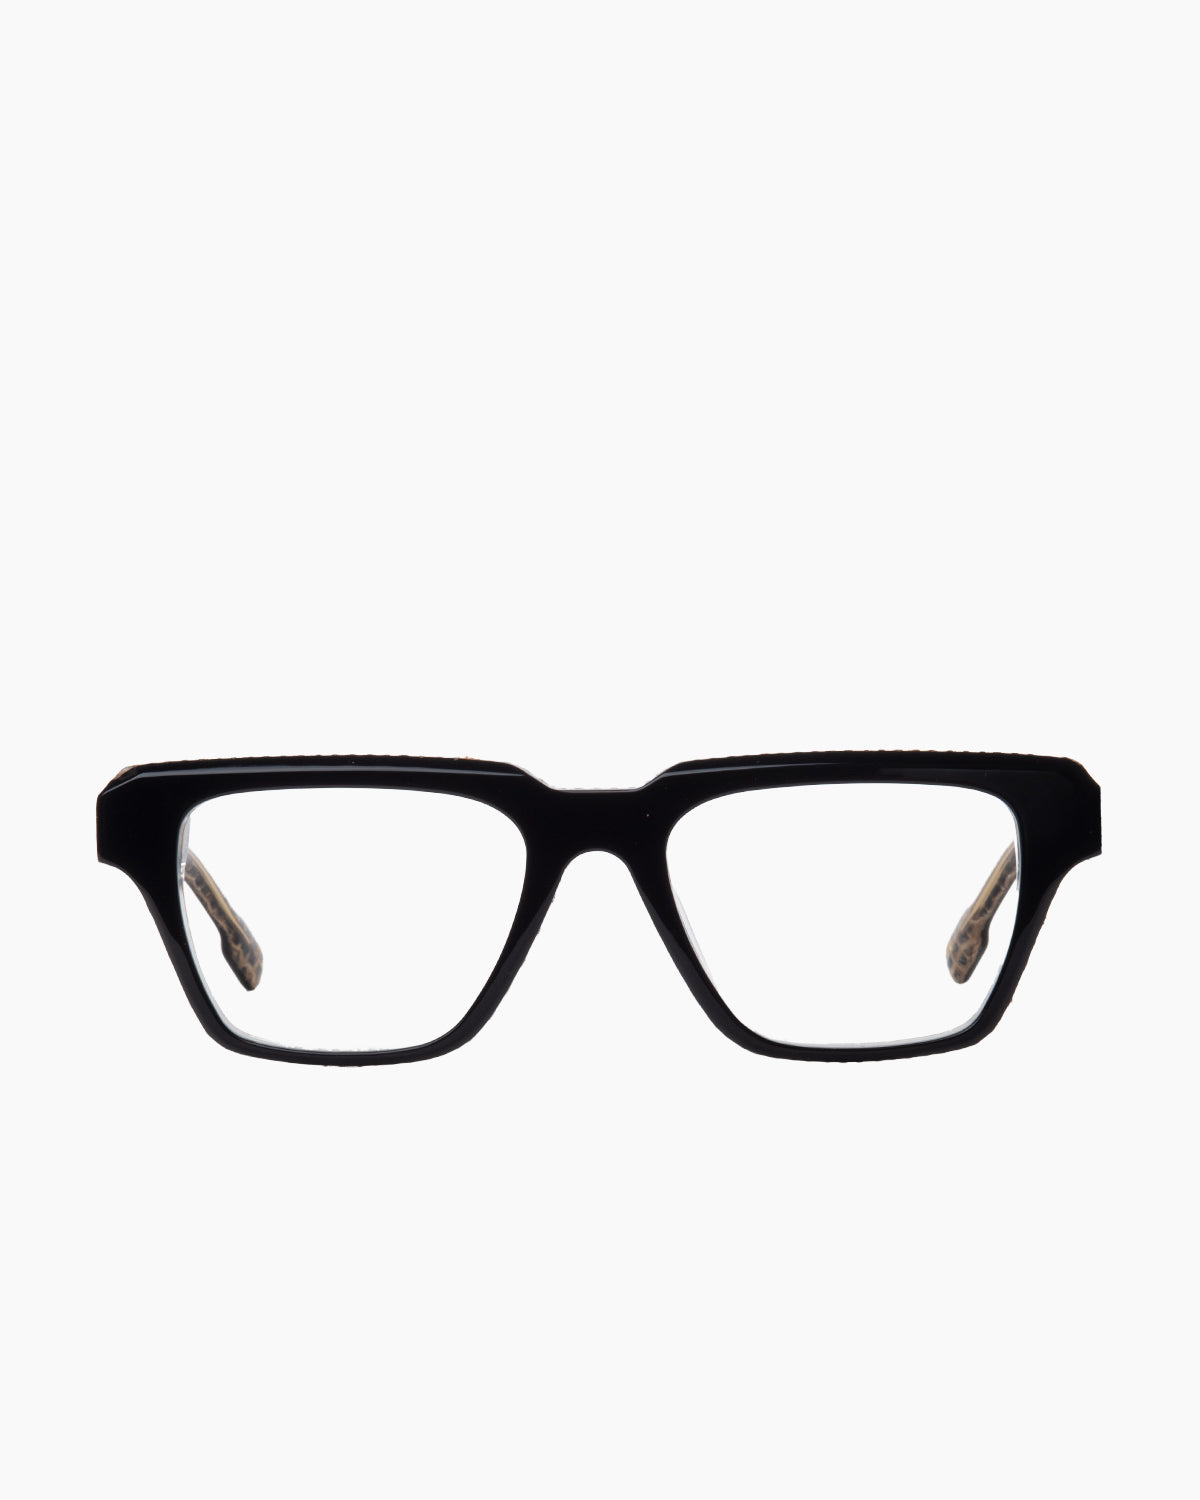 Spectacleeyeworks - Brad - c306FB | Bar à lunettes:  Marie-Sophie Dion